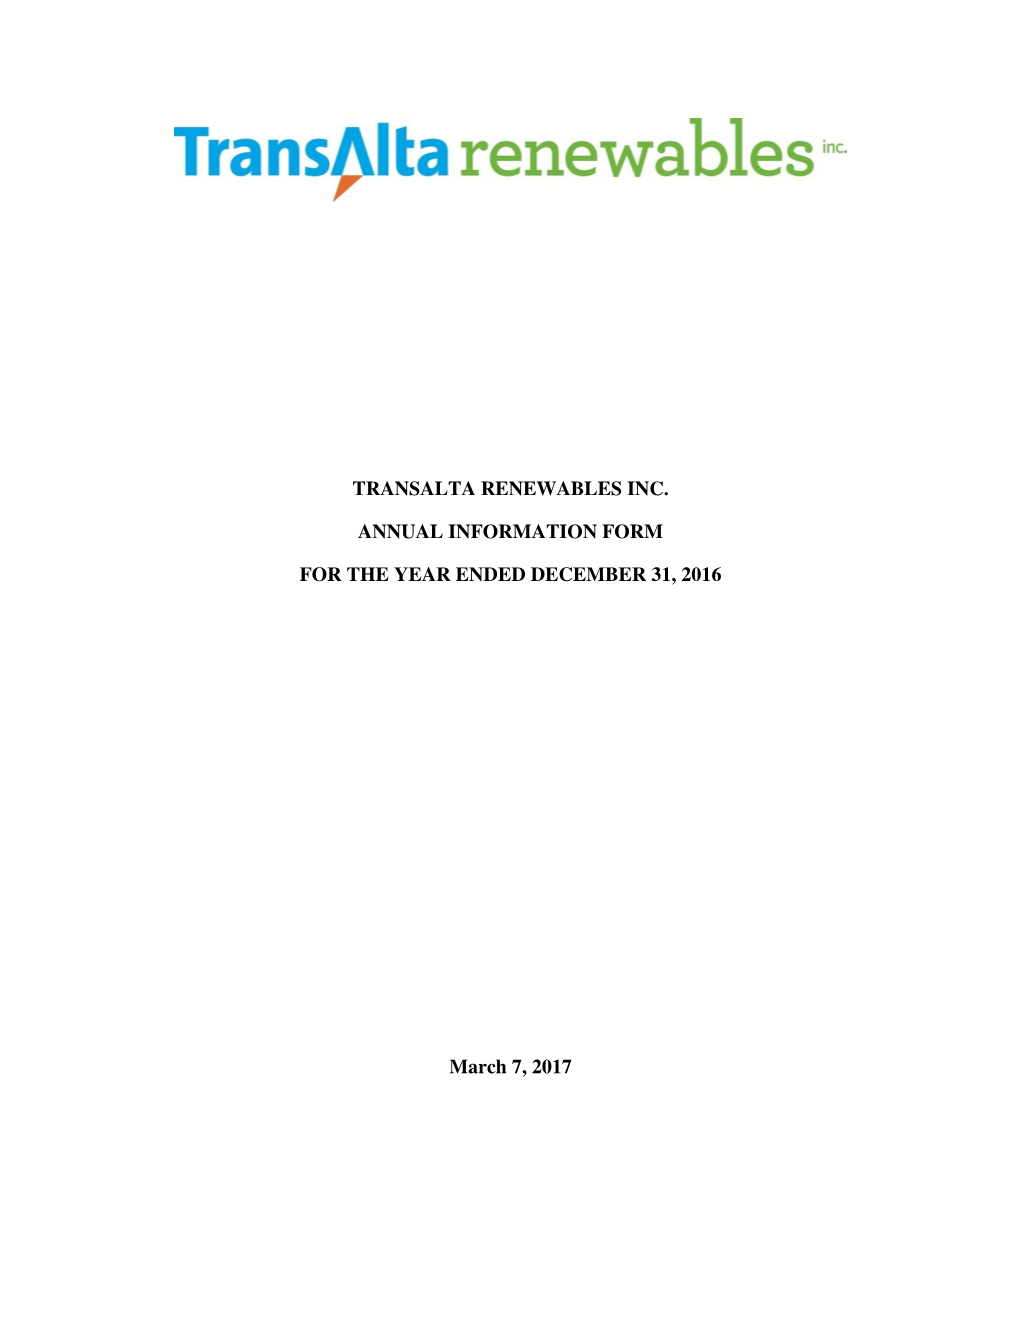 Transalta Renewables Inc. Annual Information Form